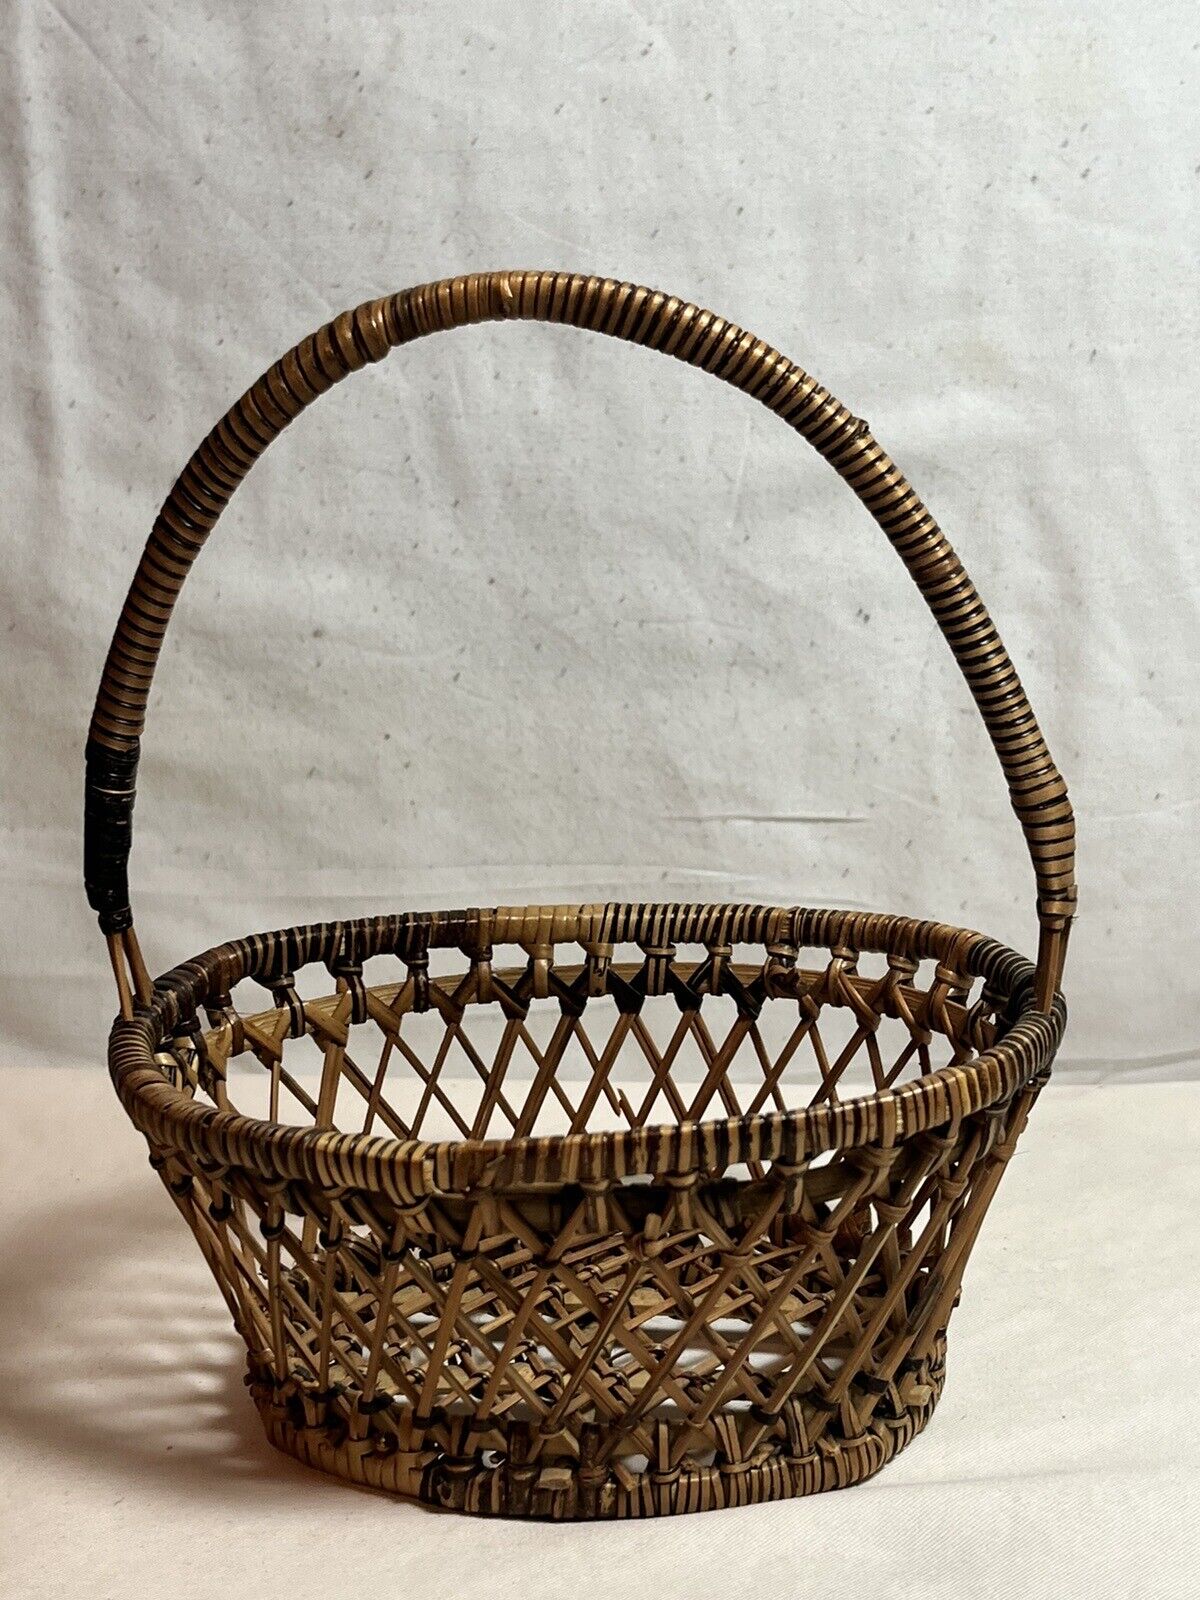 Antique/Vintage Wicker Bent Wood Accent Basket 6.5”x 3.5”x 7” Tall